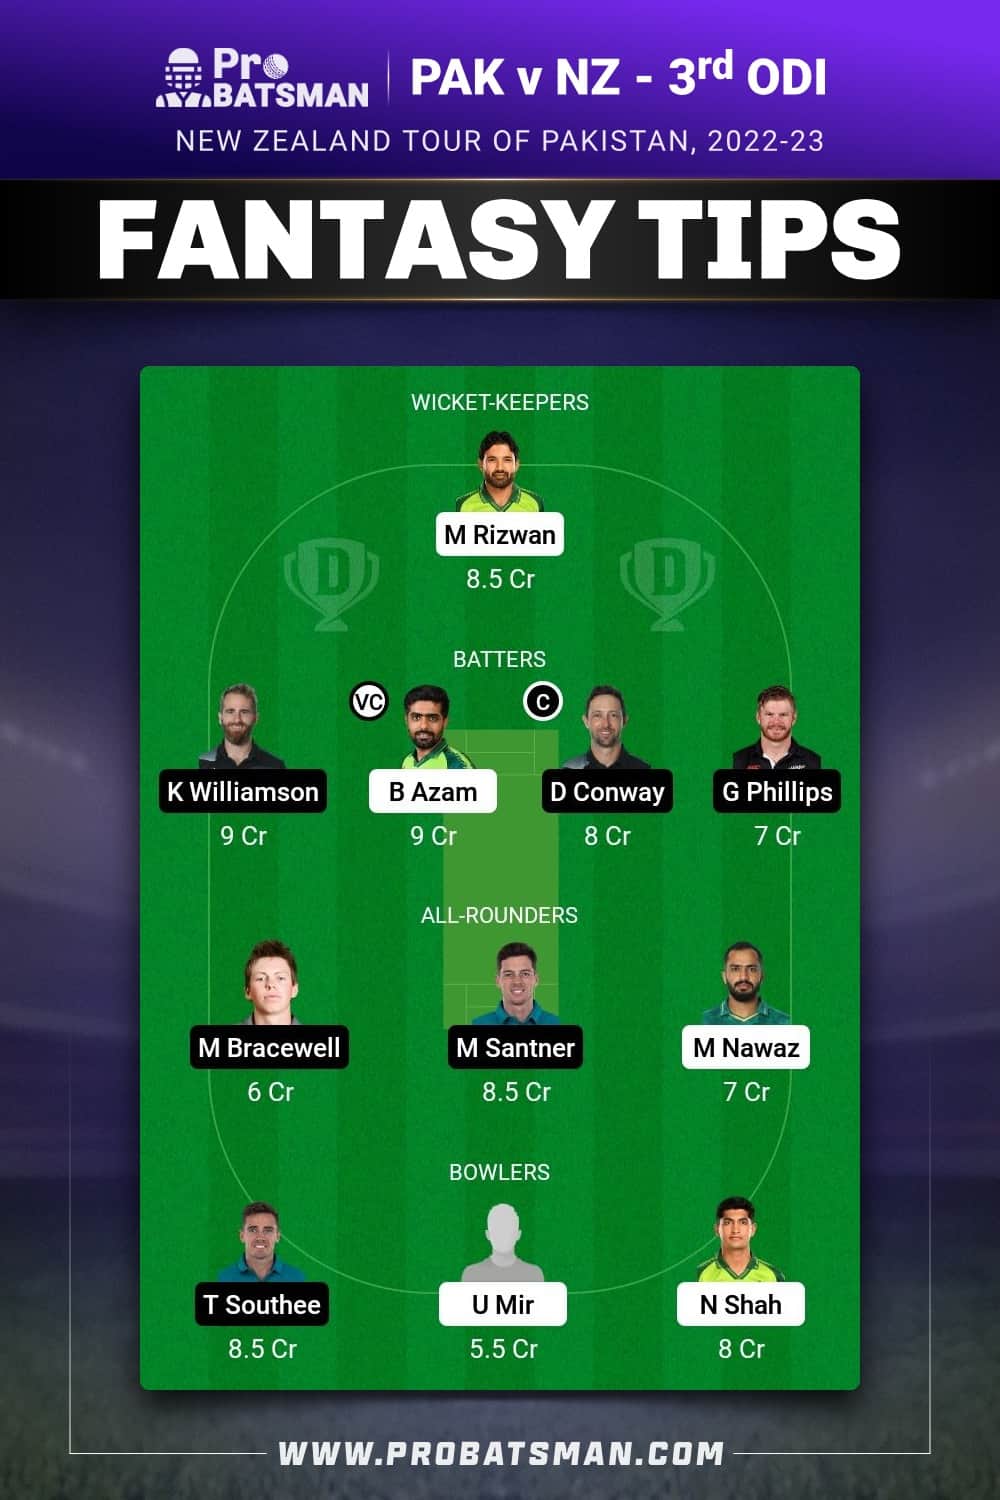 PAK vs NZ Dream11 Prediction - Fantasy Team 1